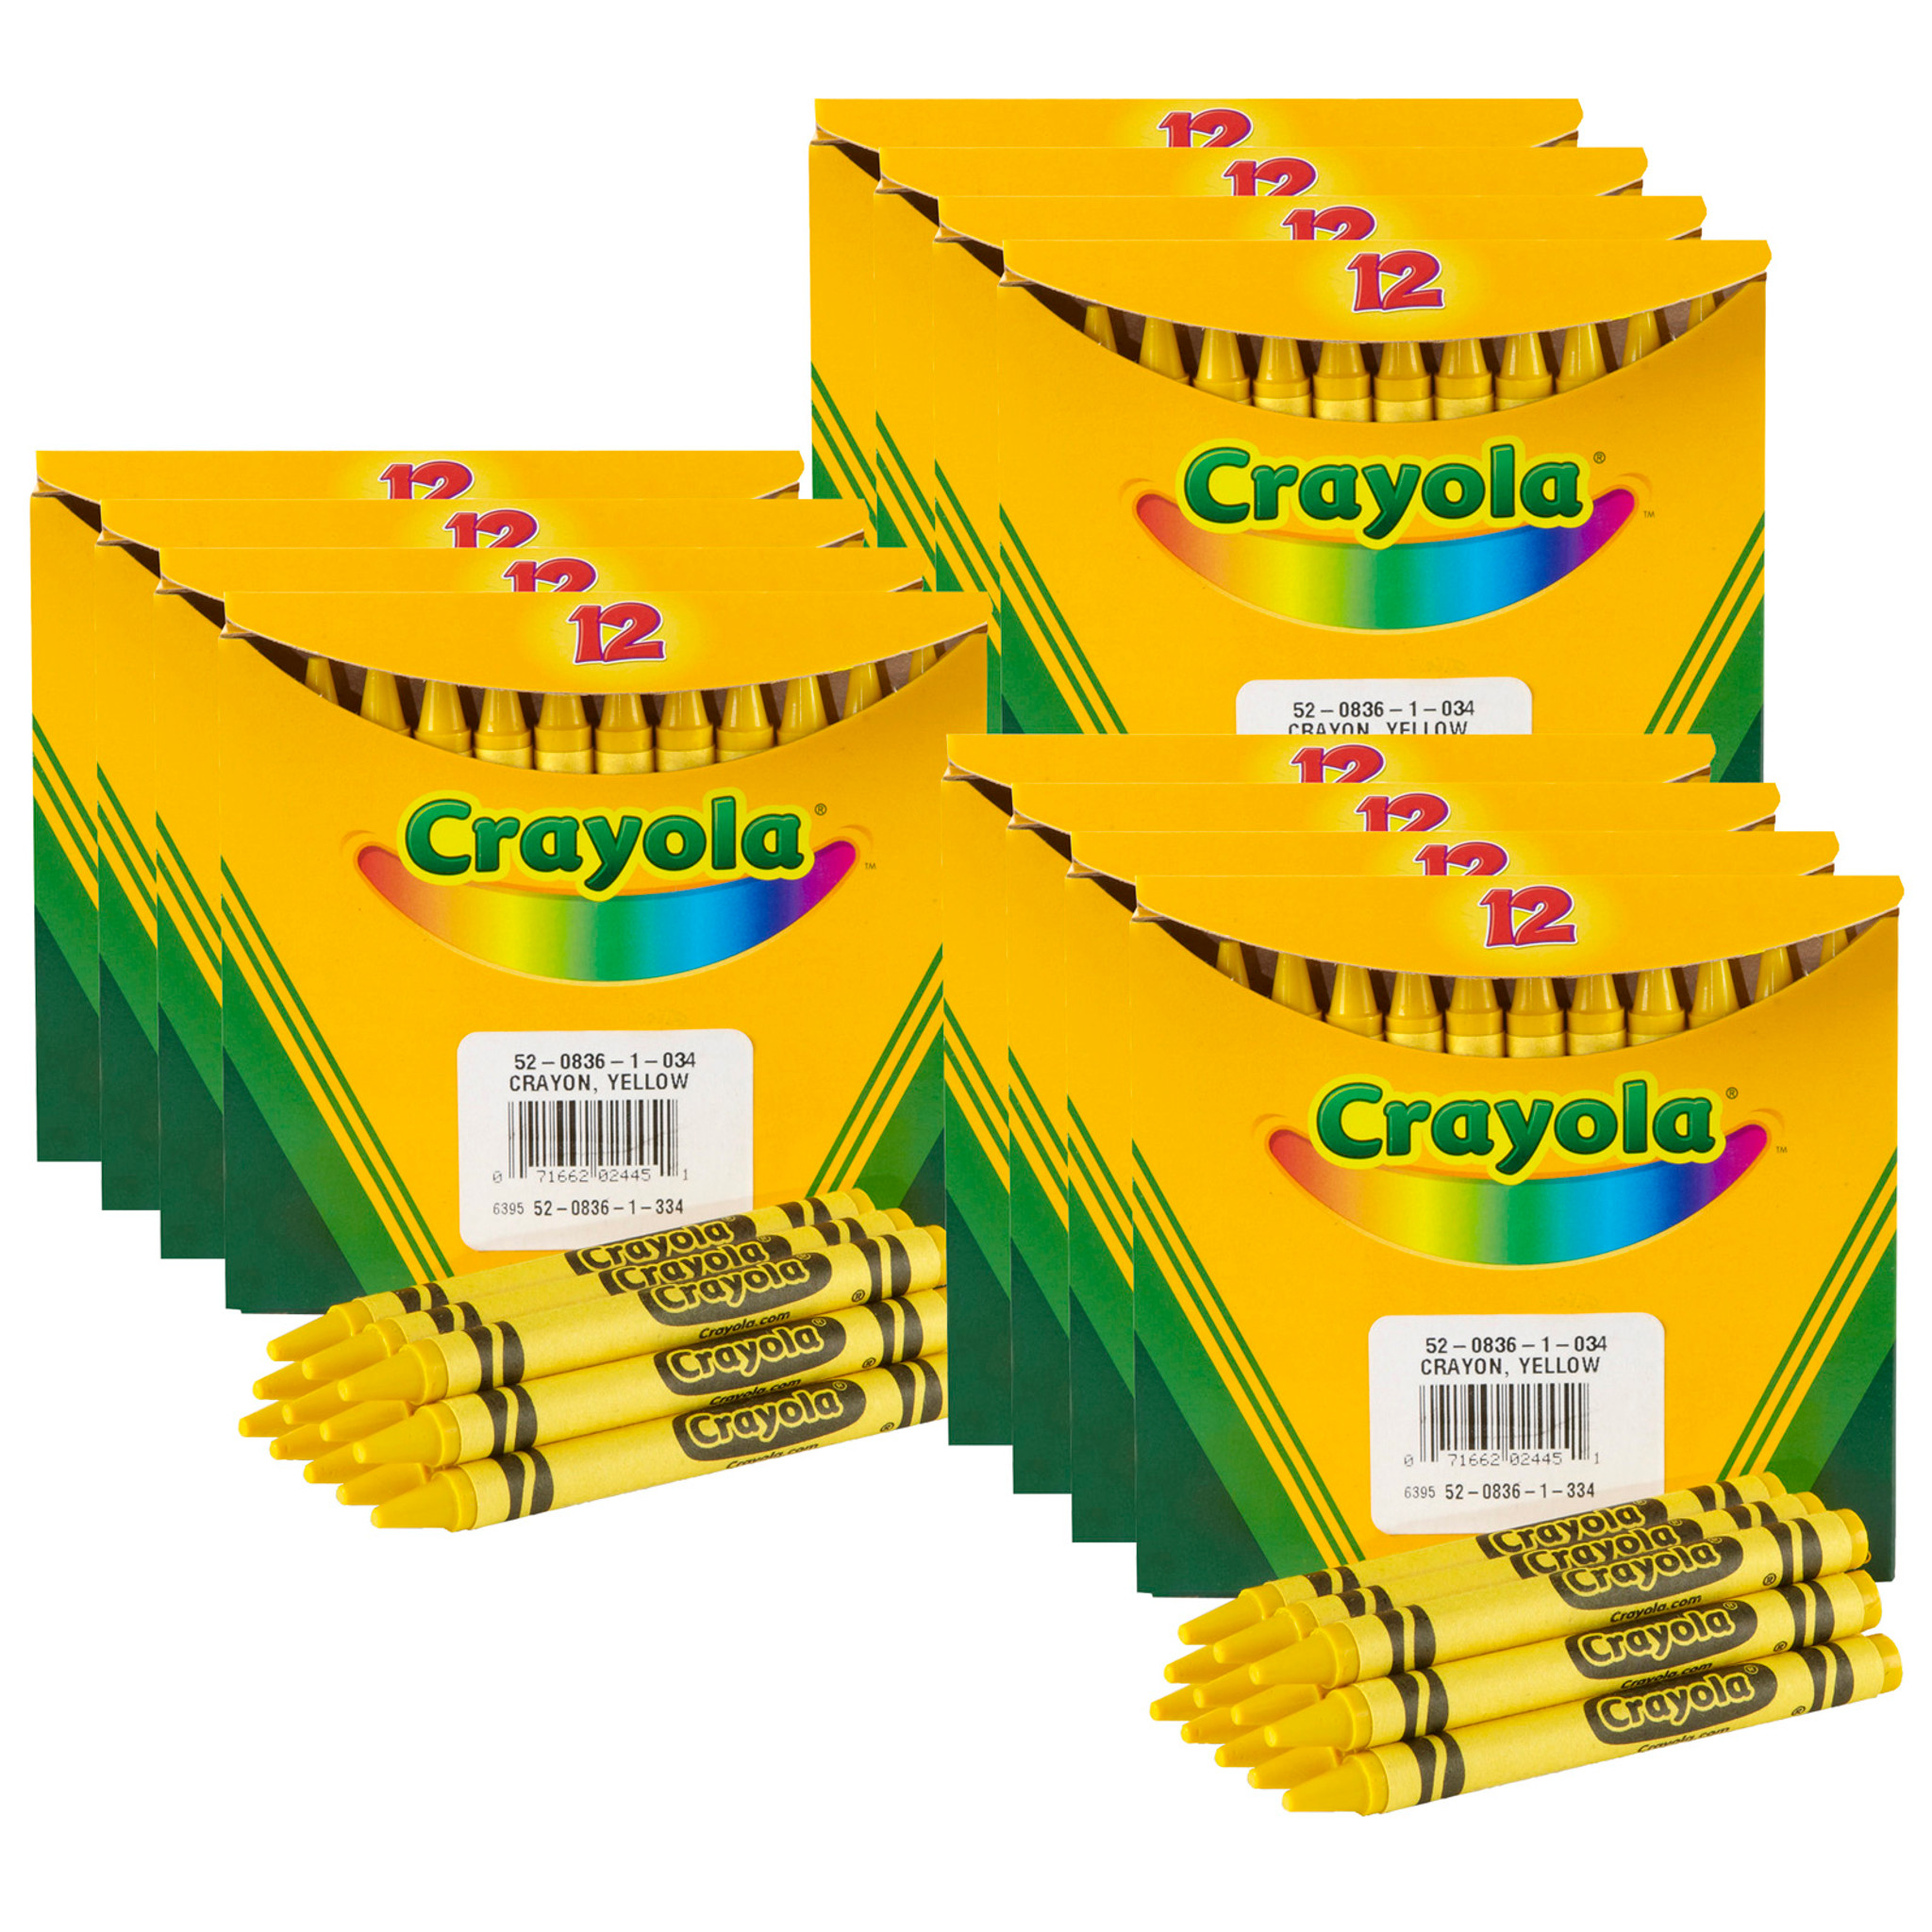 Bulk Individual Crayons — CrayonKing